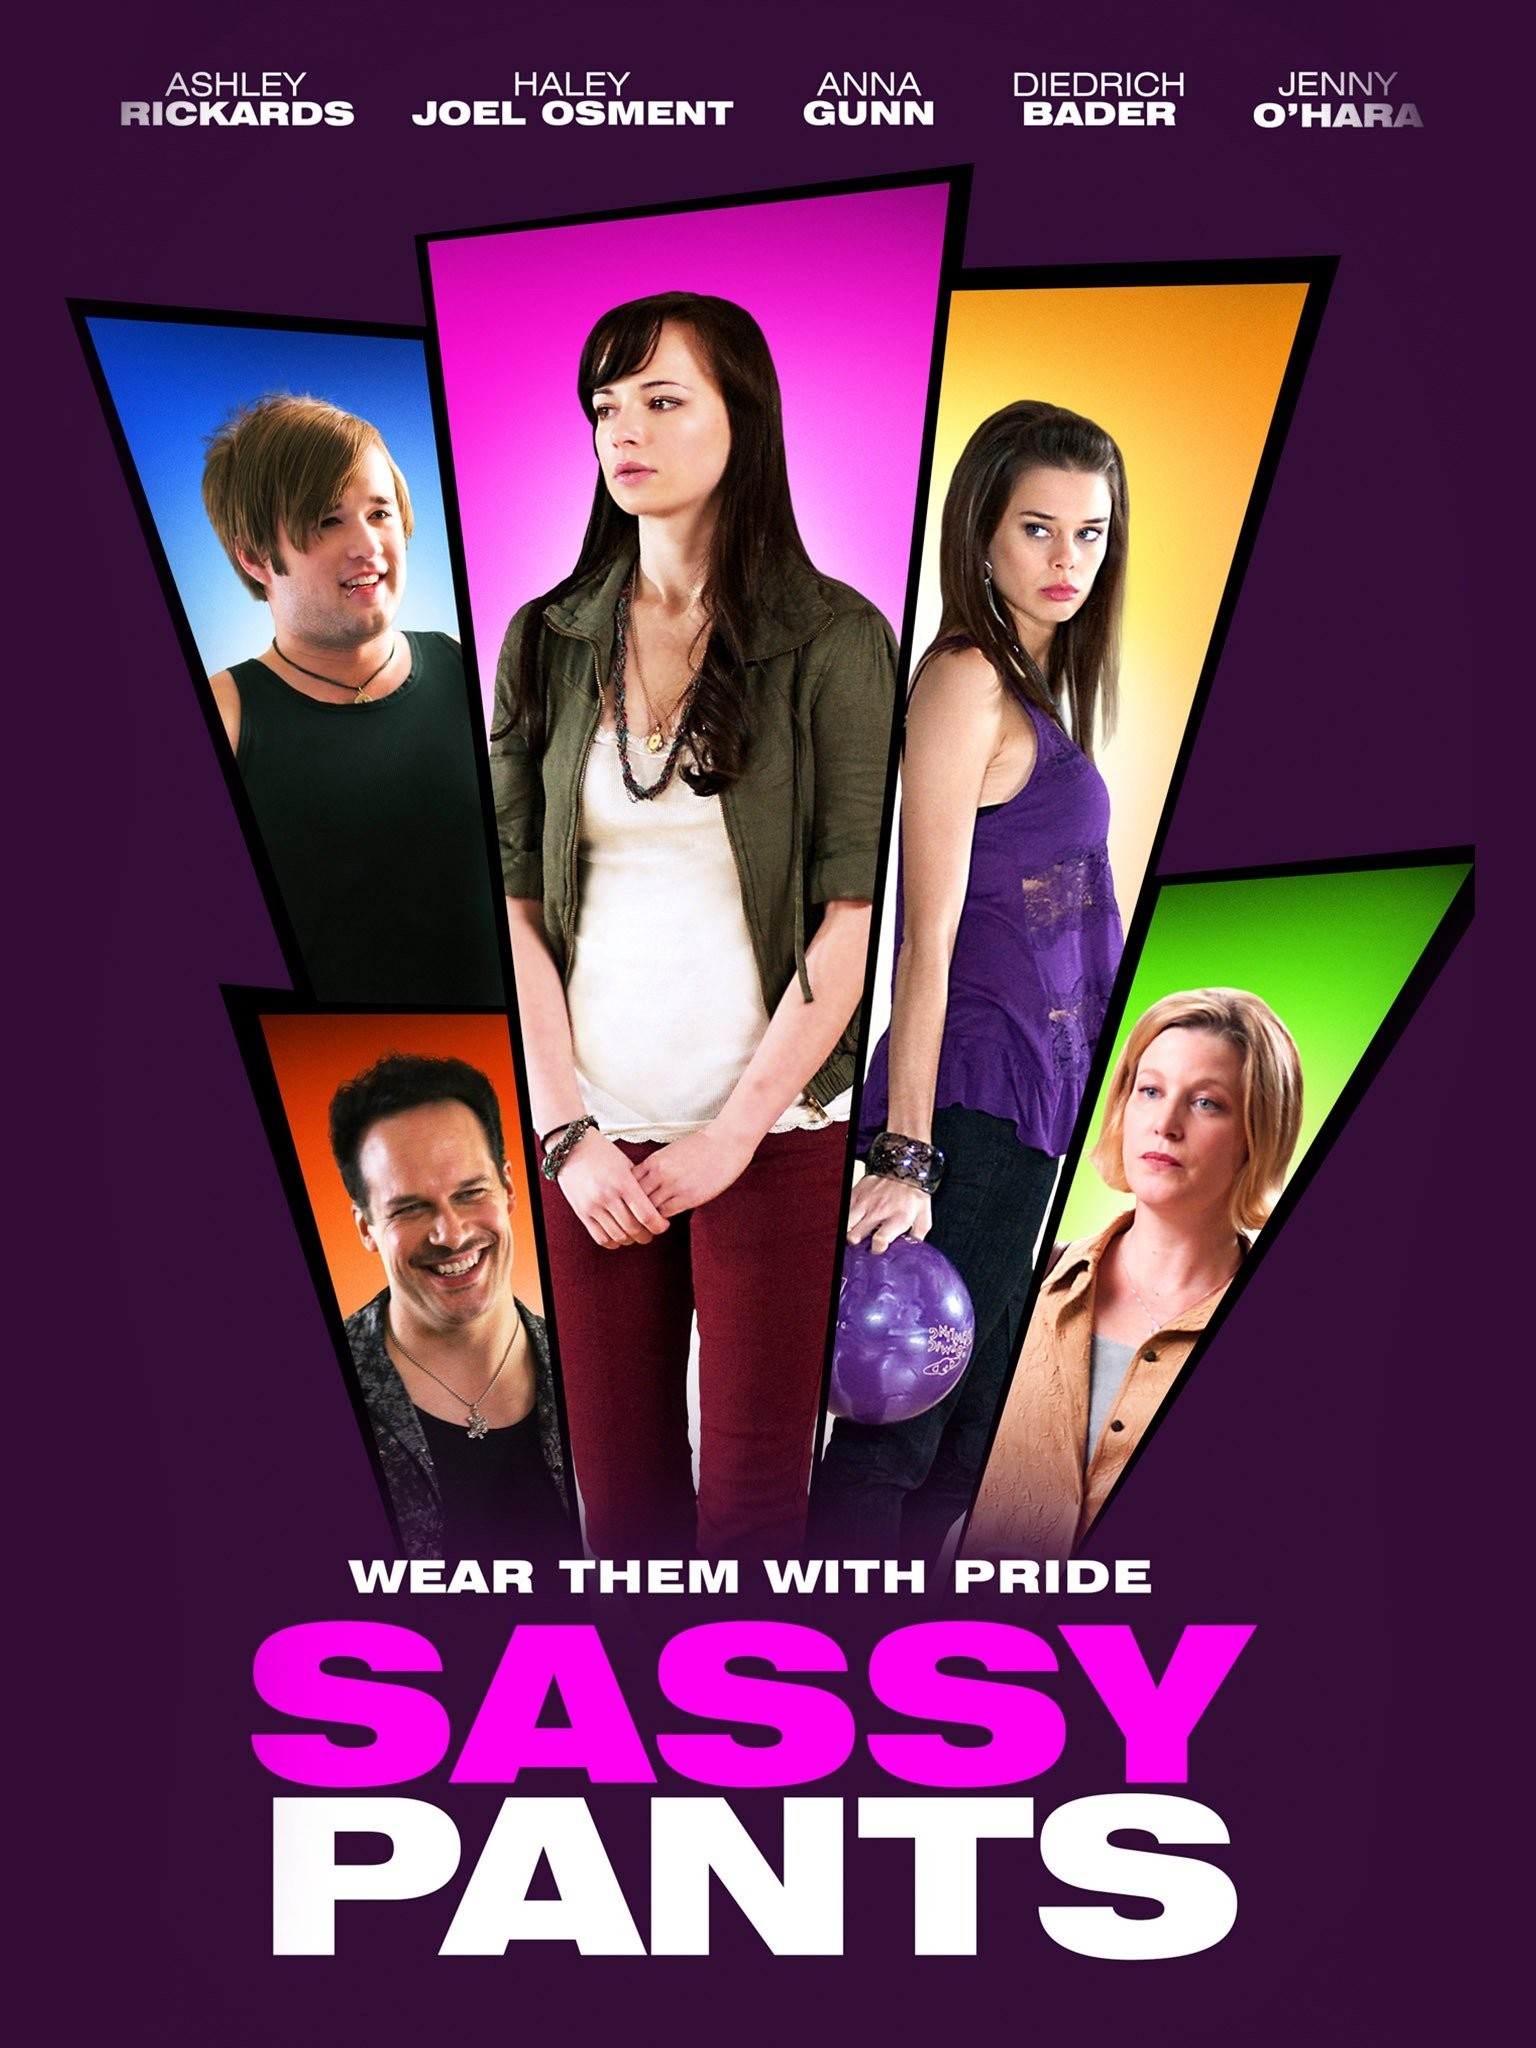 Sassy Pants Official Trailer #1 (2012) - Haley Joel Osment, Ashley Rickards  Movie HD 